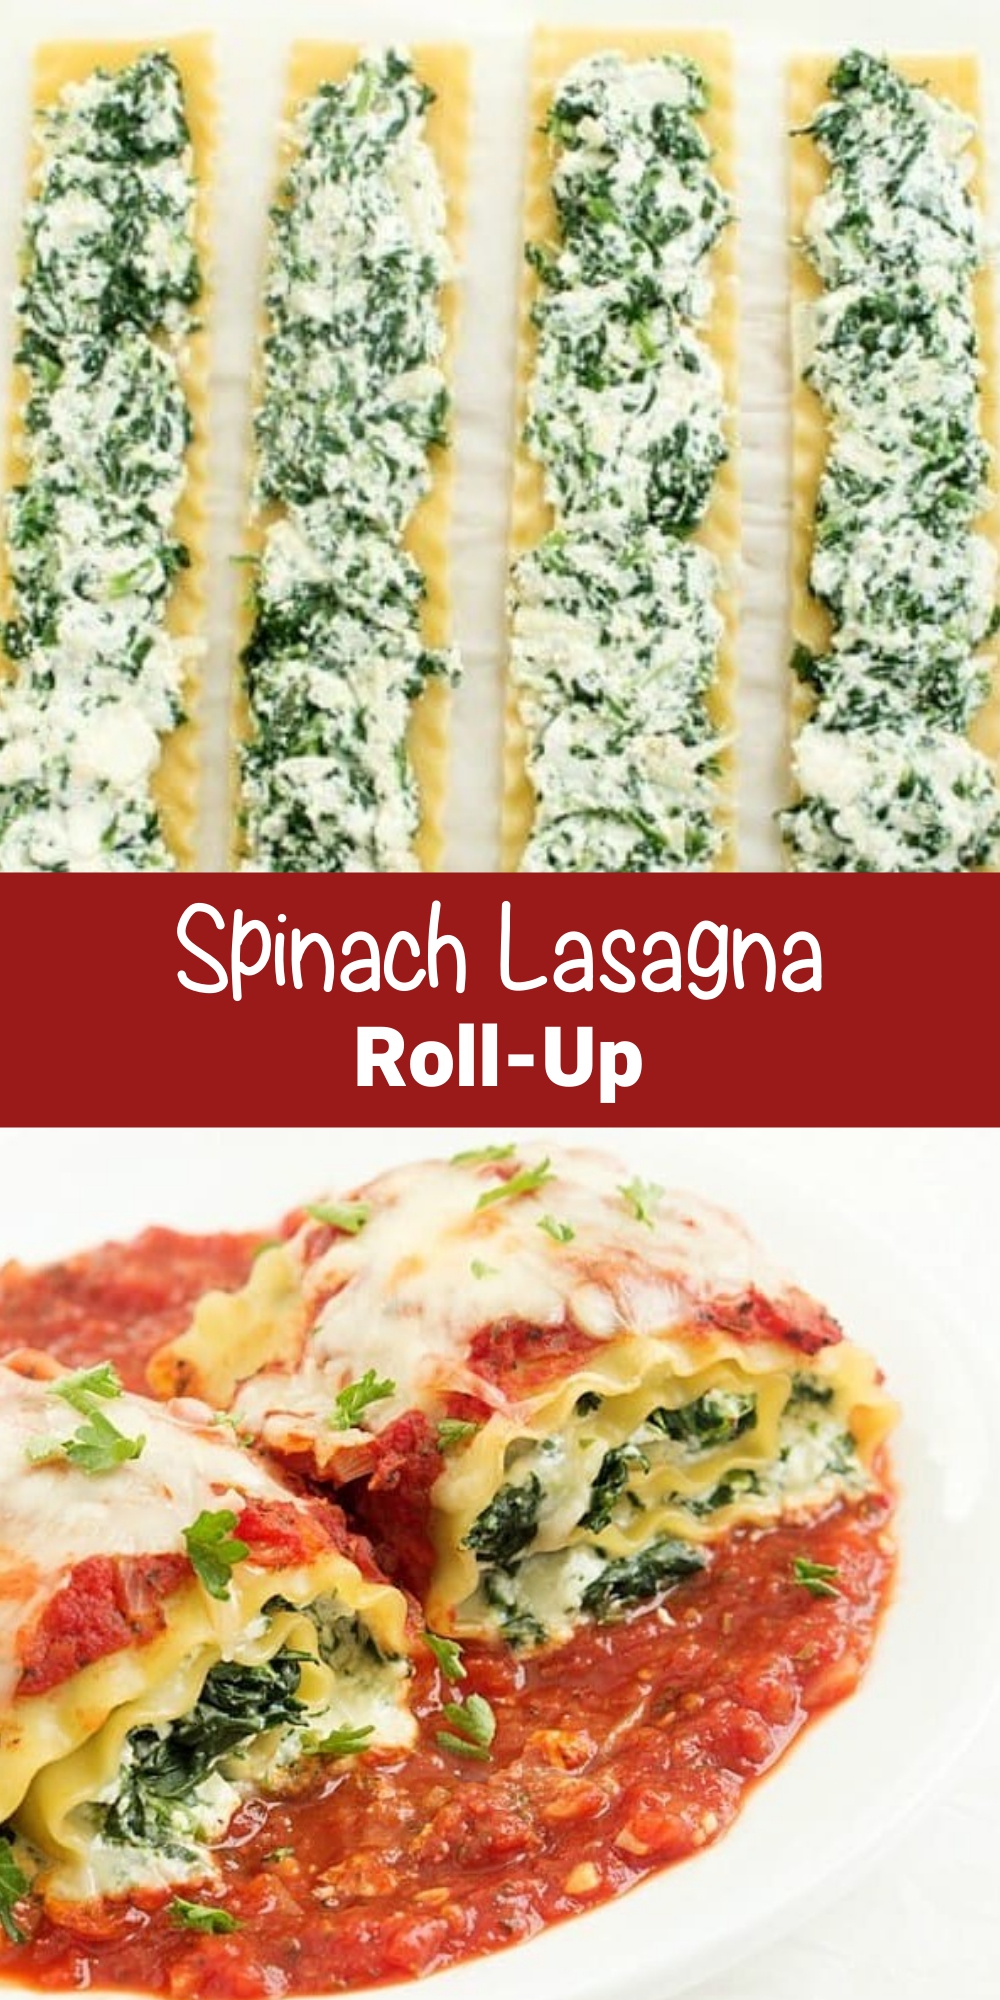 Spinach Lasagna Roll-Up Recipe - Cucinadeyung